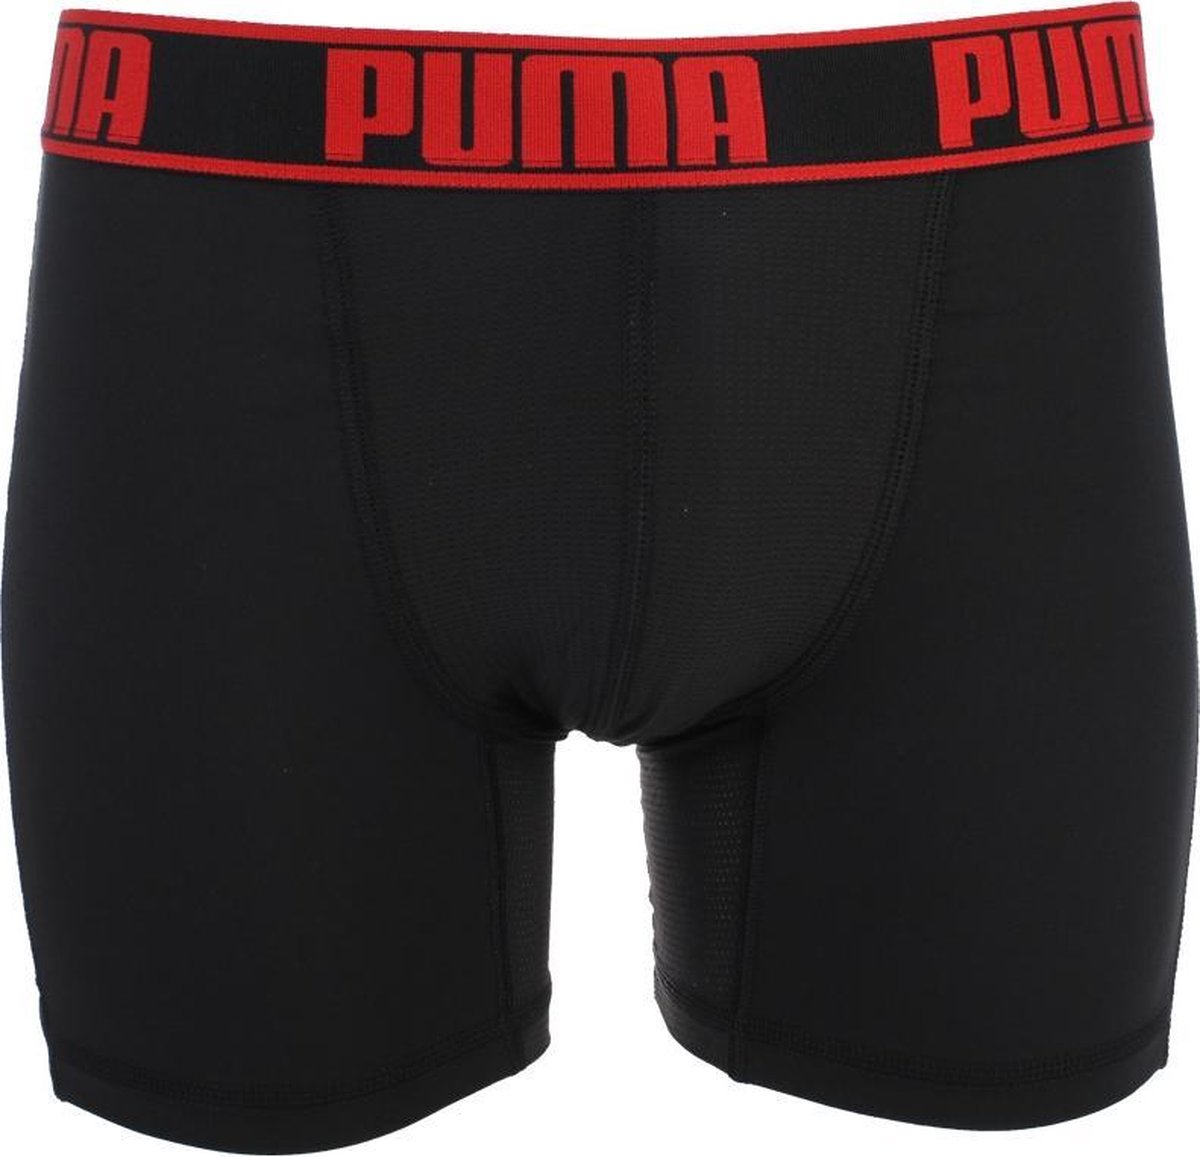 PUMA Active Style Boxershort - 2-pack - Zwart - Maat S | bol.com